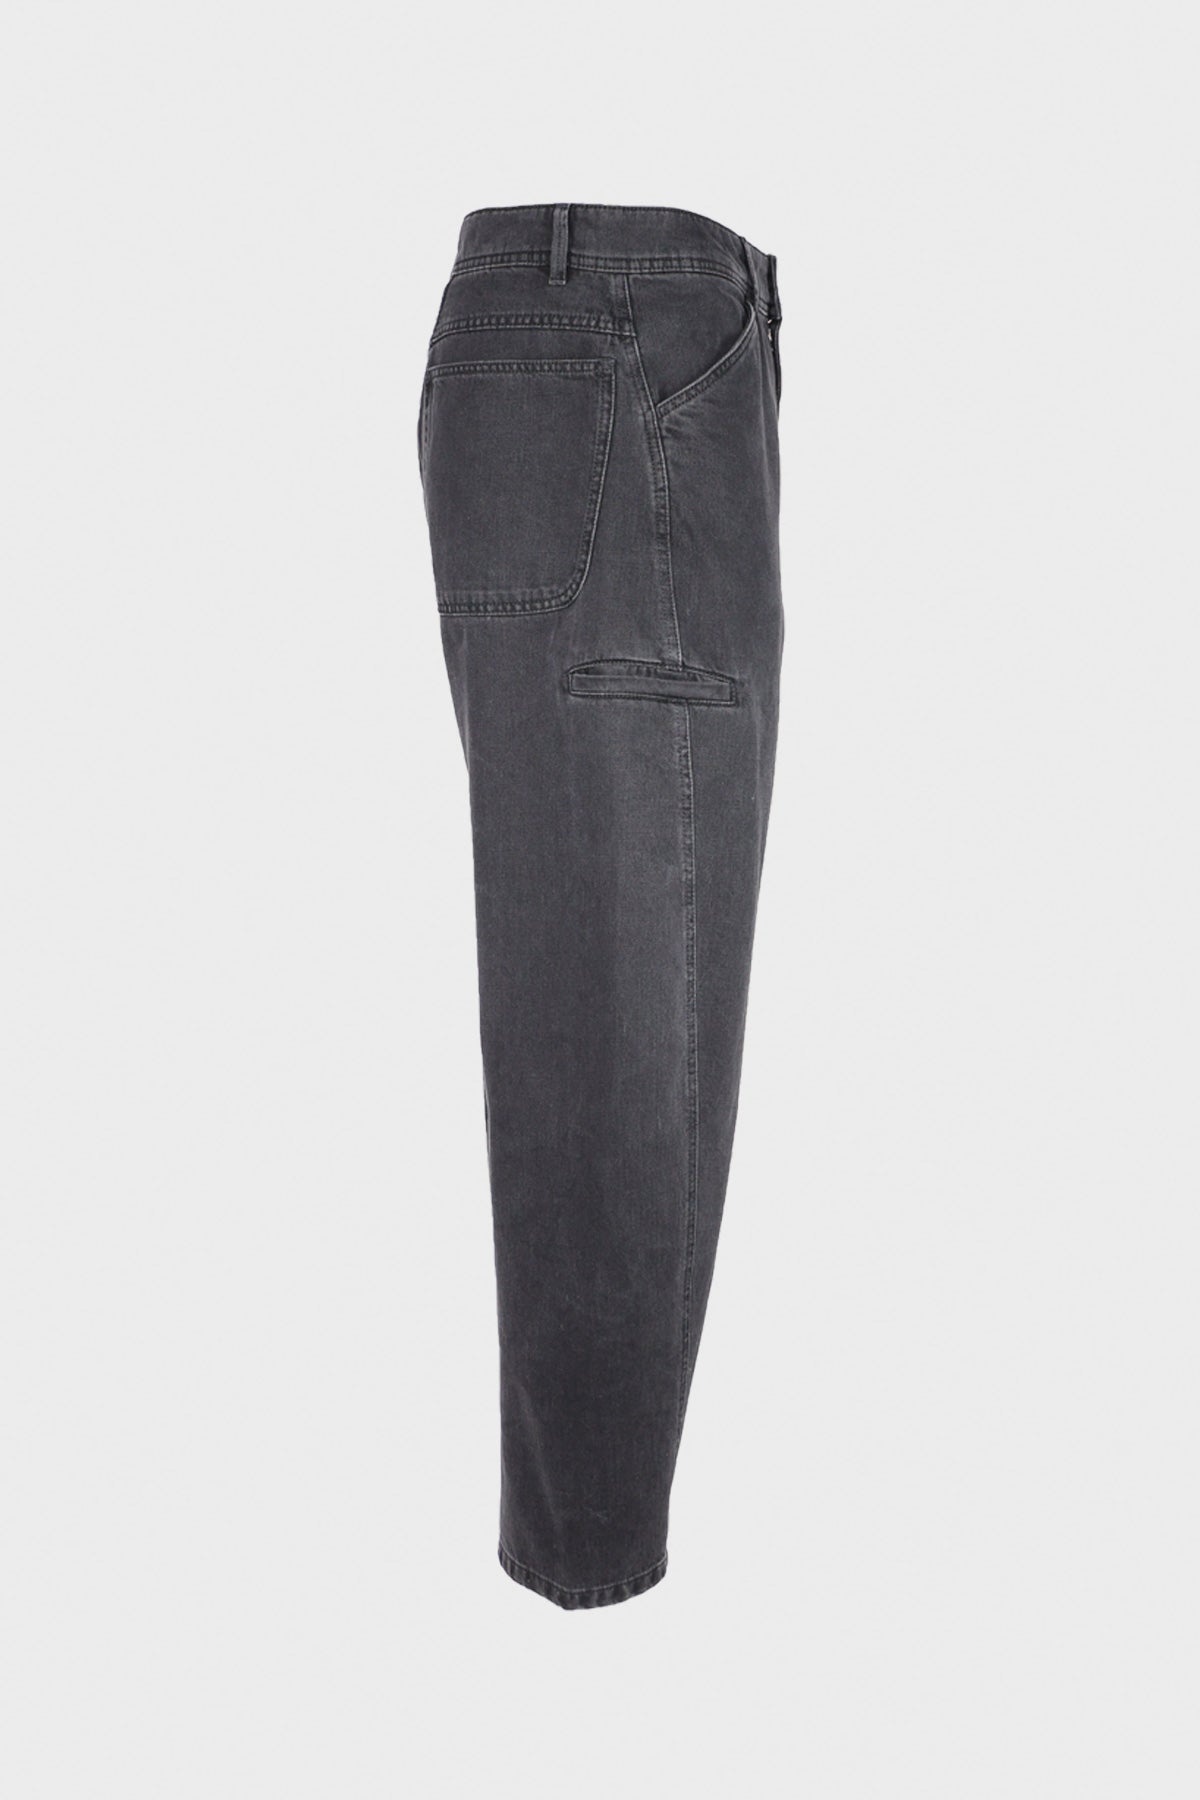 Twisted Workwear Pants - Denim Soft Bleached Black - 2